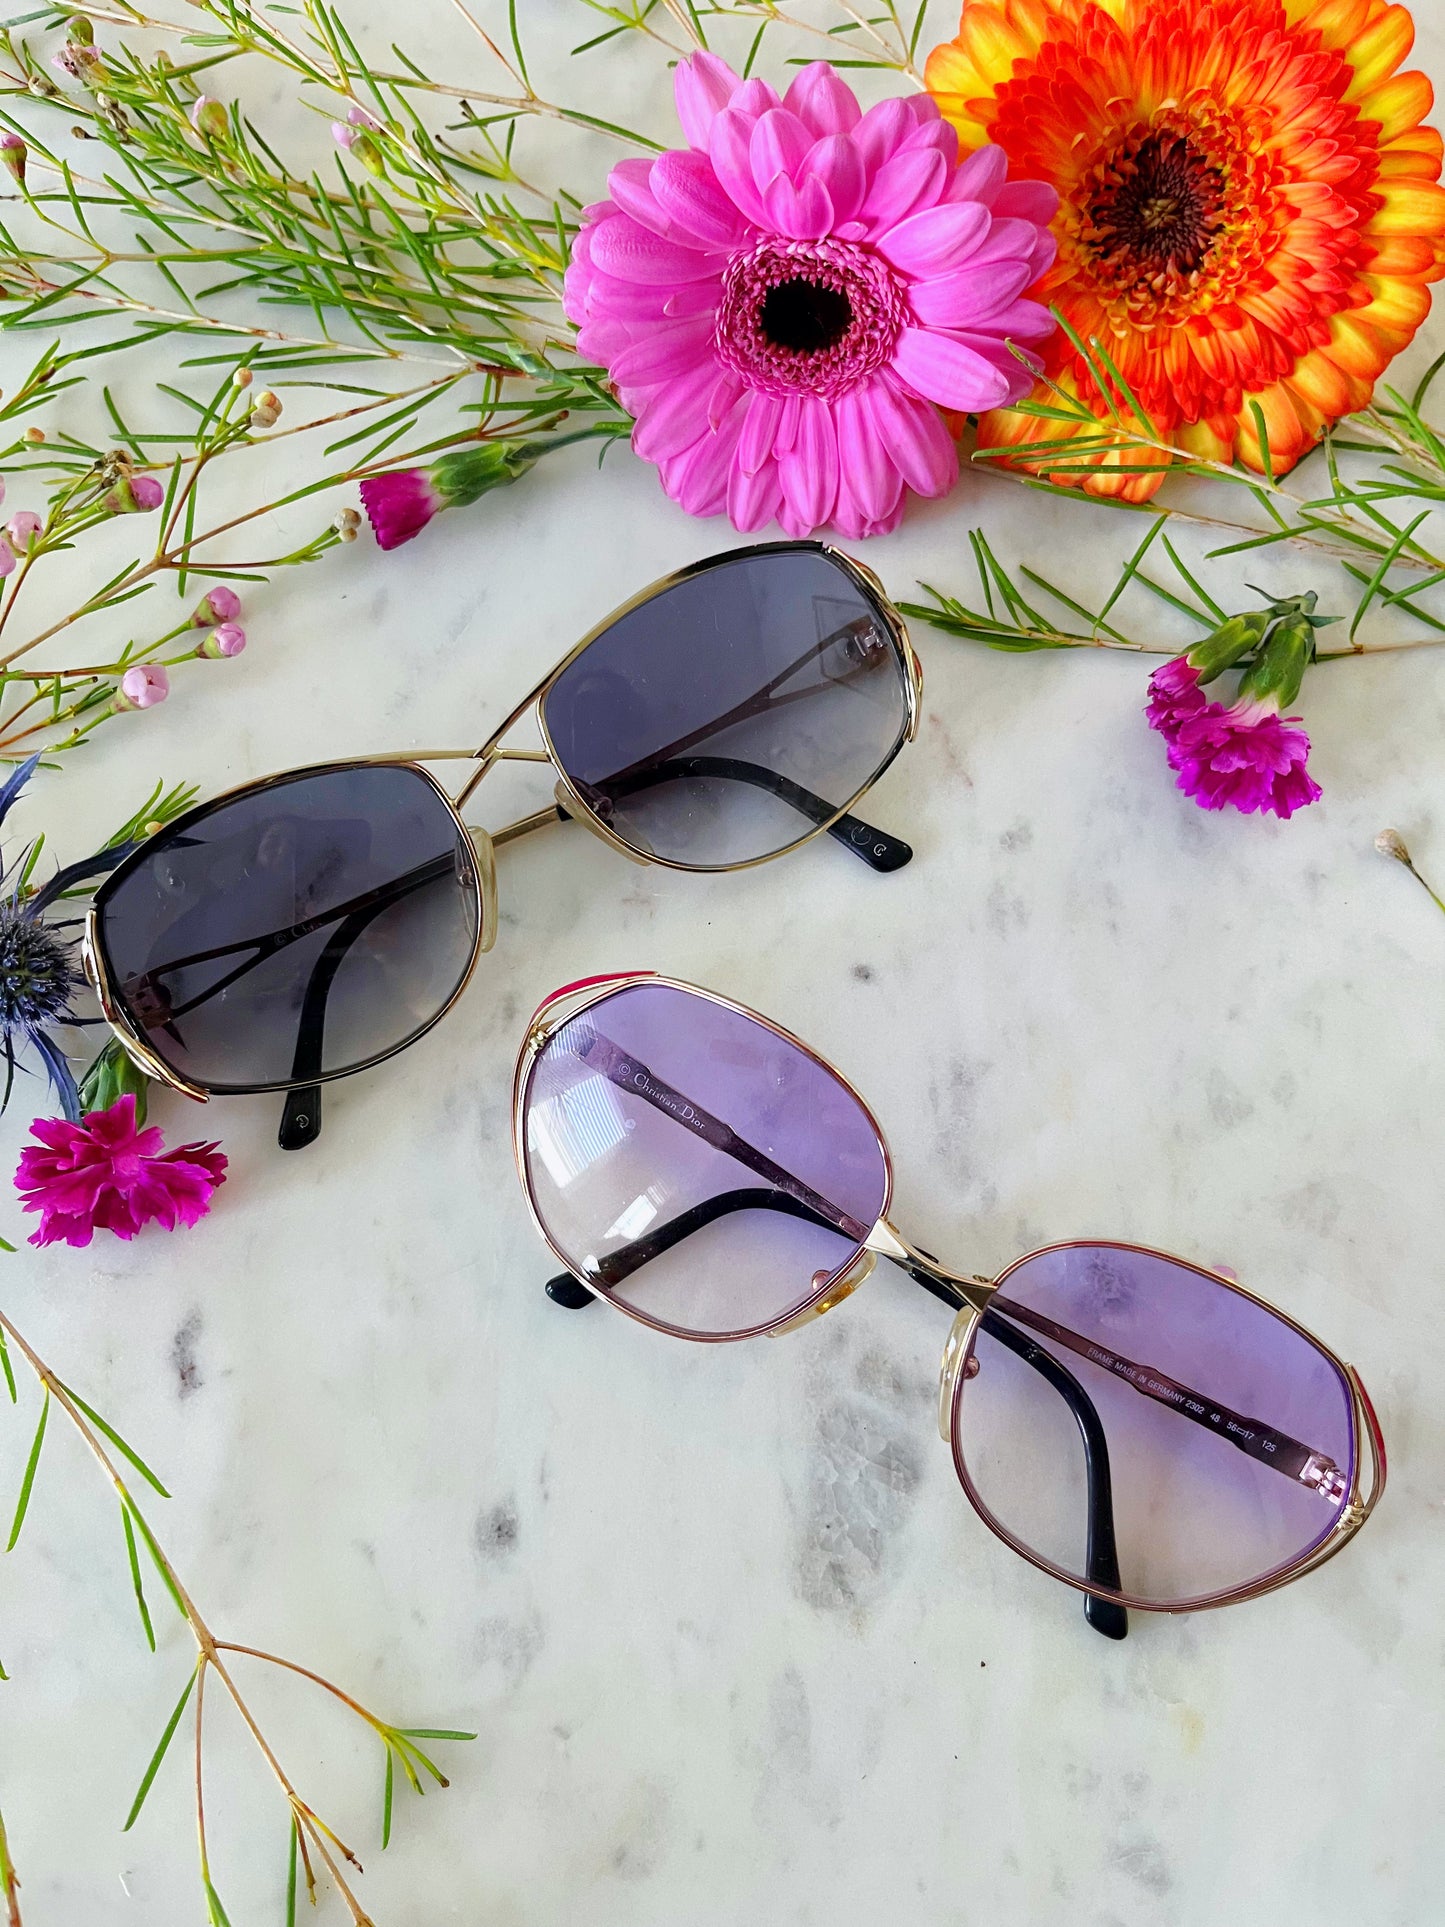 Christian Dior Sunglasses- Deep Pink/Gold